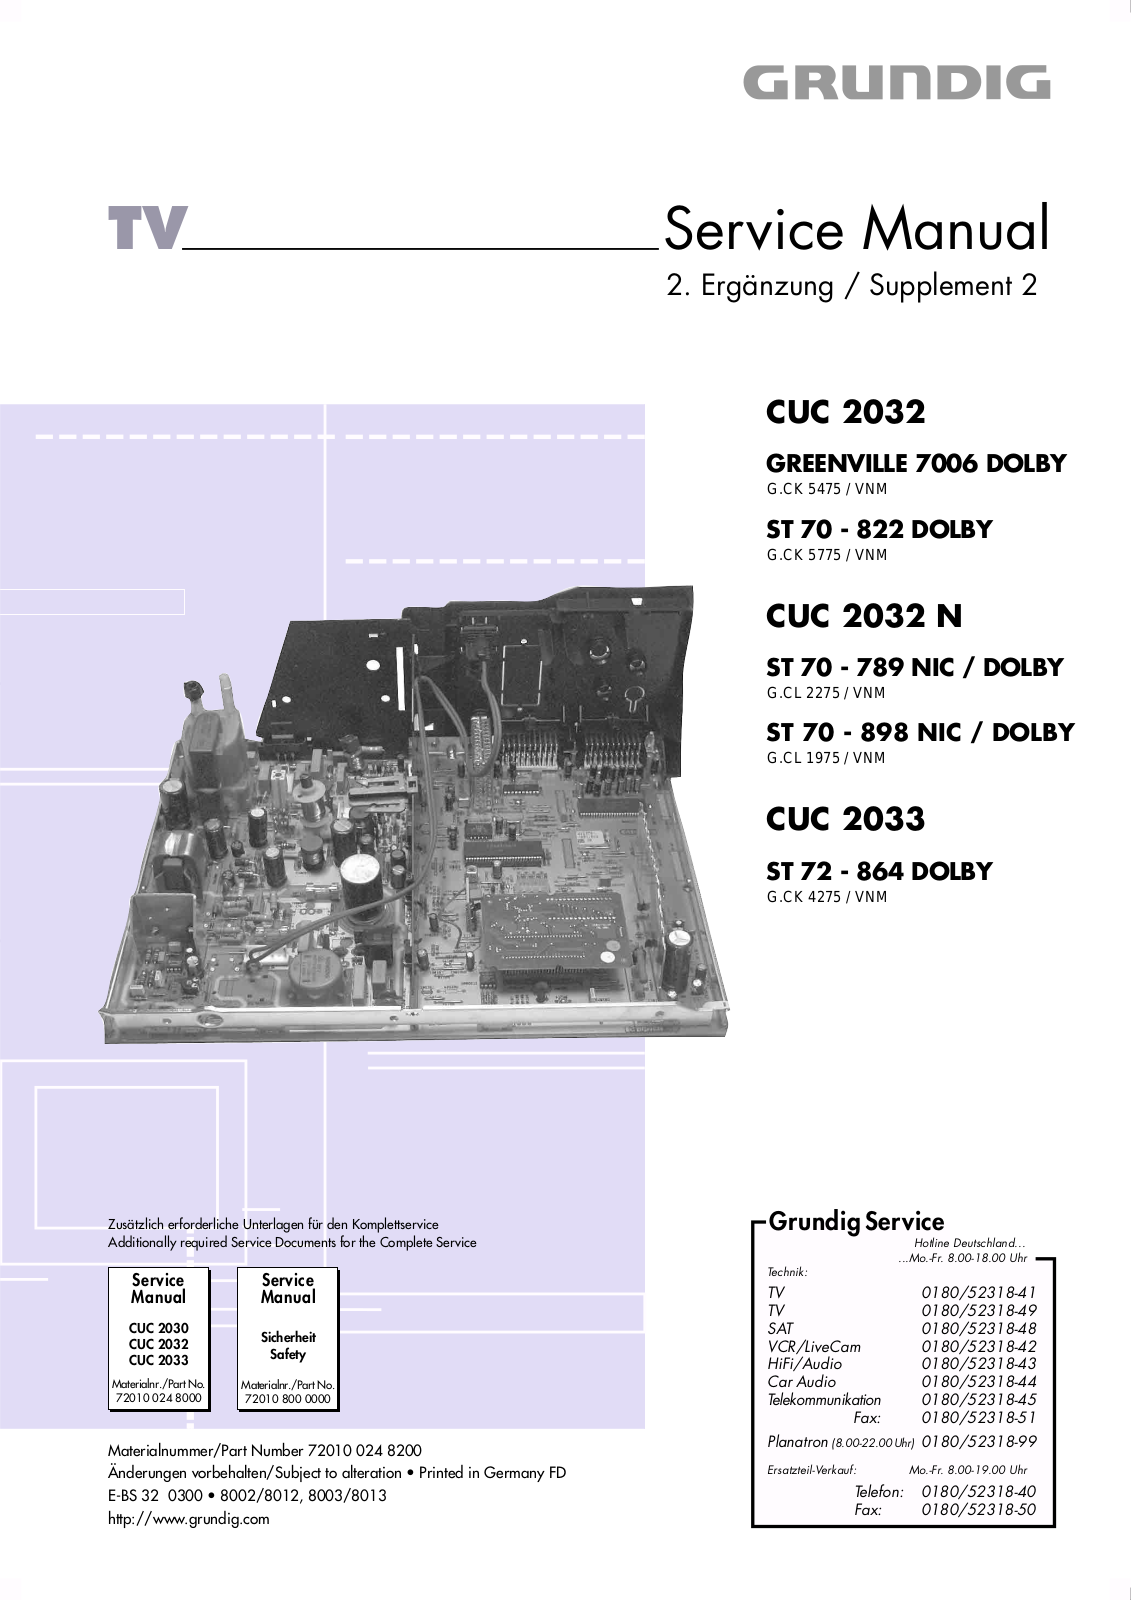 Grundig ST 70 - 822, ST 72 - 864, ST 70 - 898 NIC, ST 70 - 789 NIC Service Manual